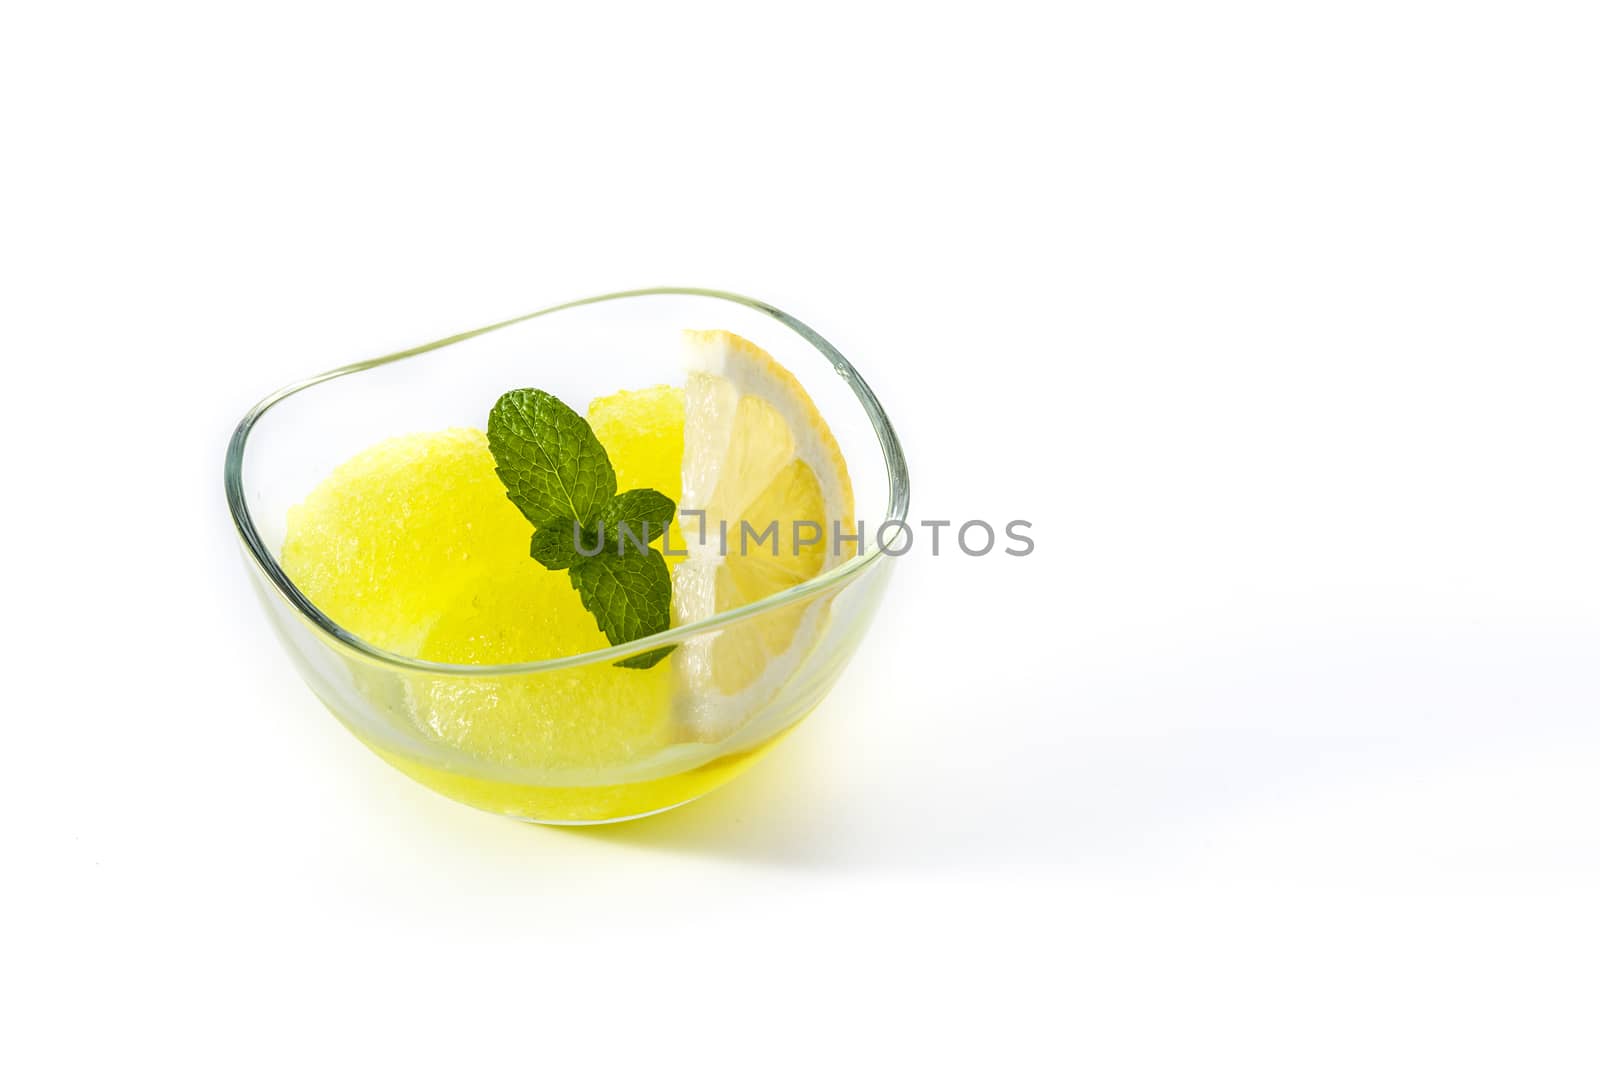 Lemon sorbet in glasses by chandlervid85